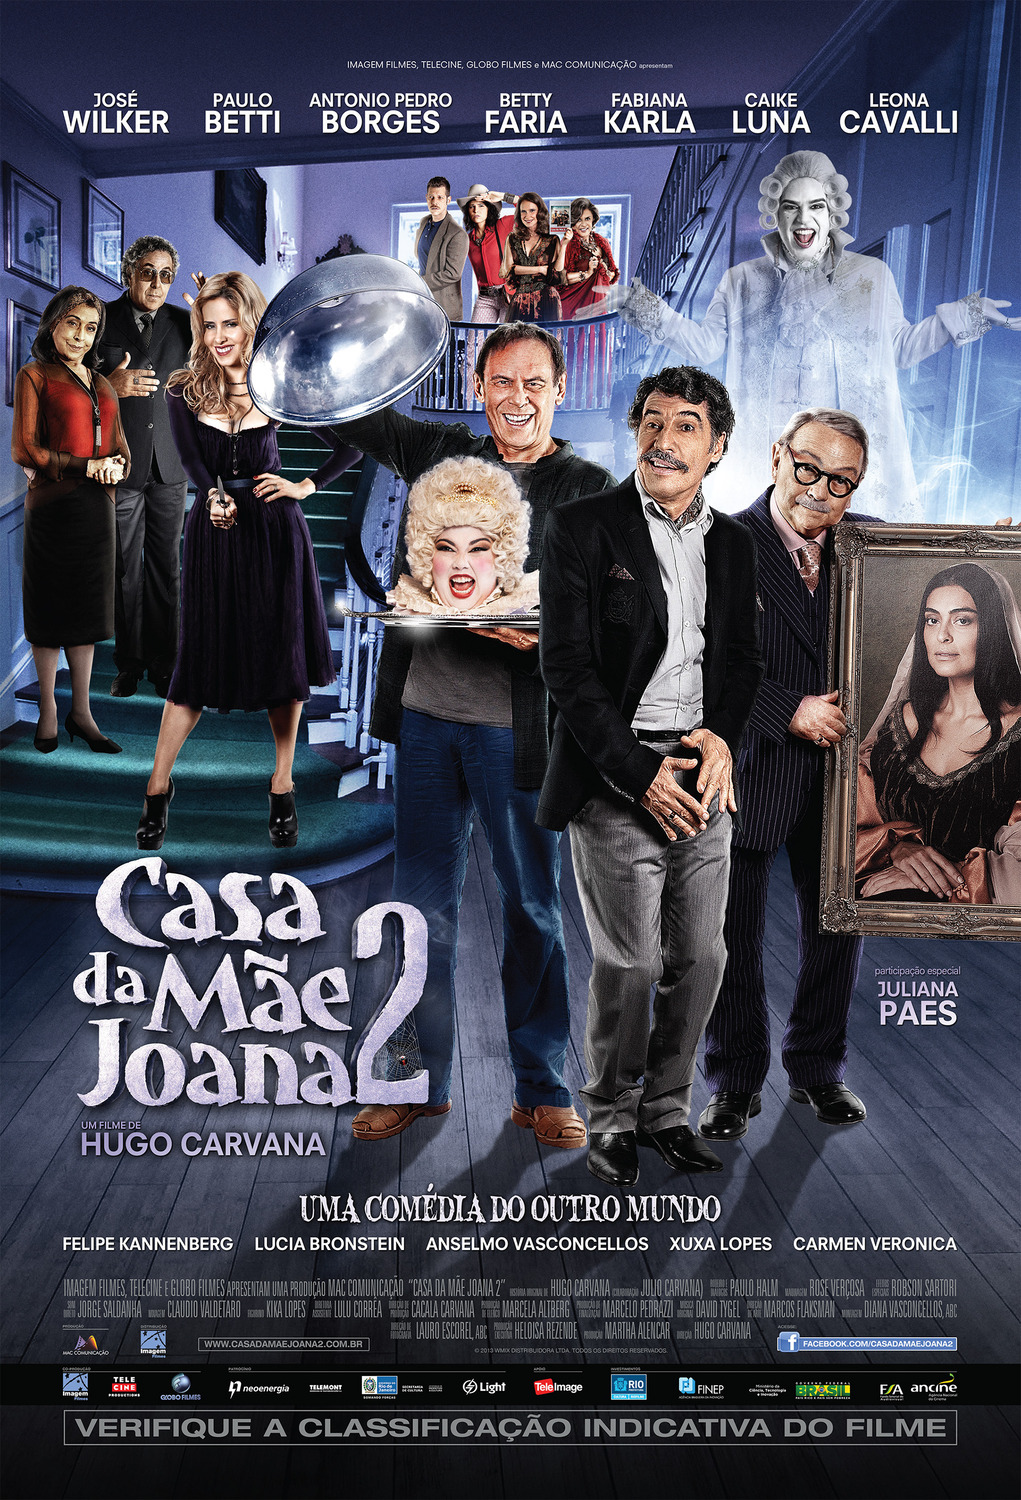 Extra Large Movie Poster Image for Casa da Mãe Joana 2 